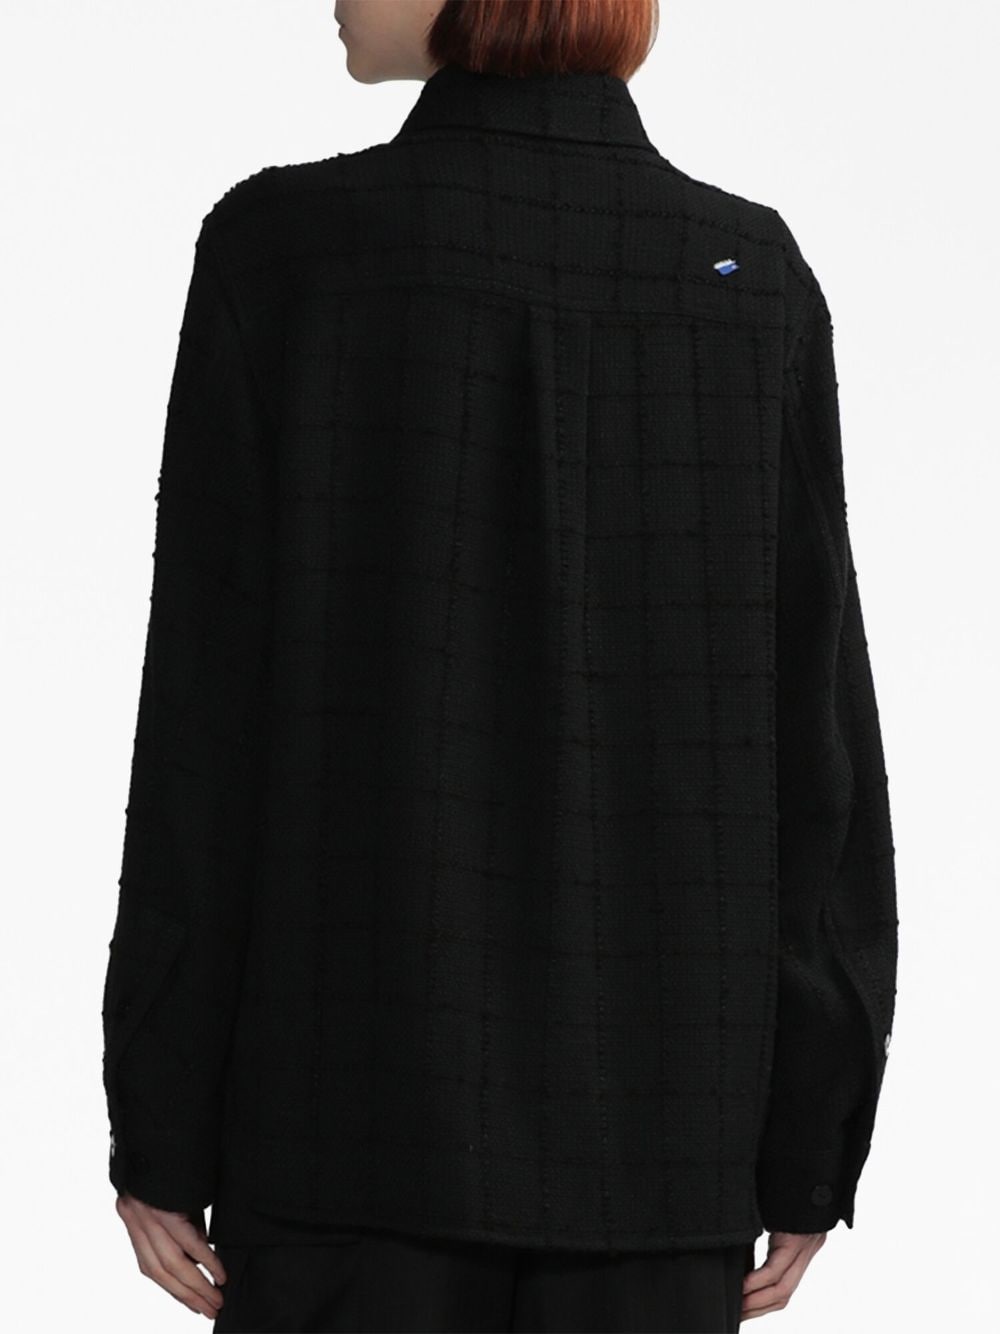 Lembu checkered shirt - 3